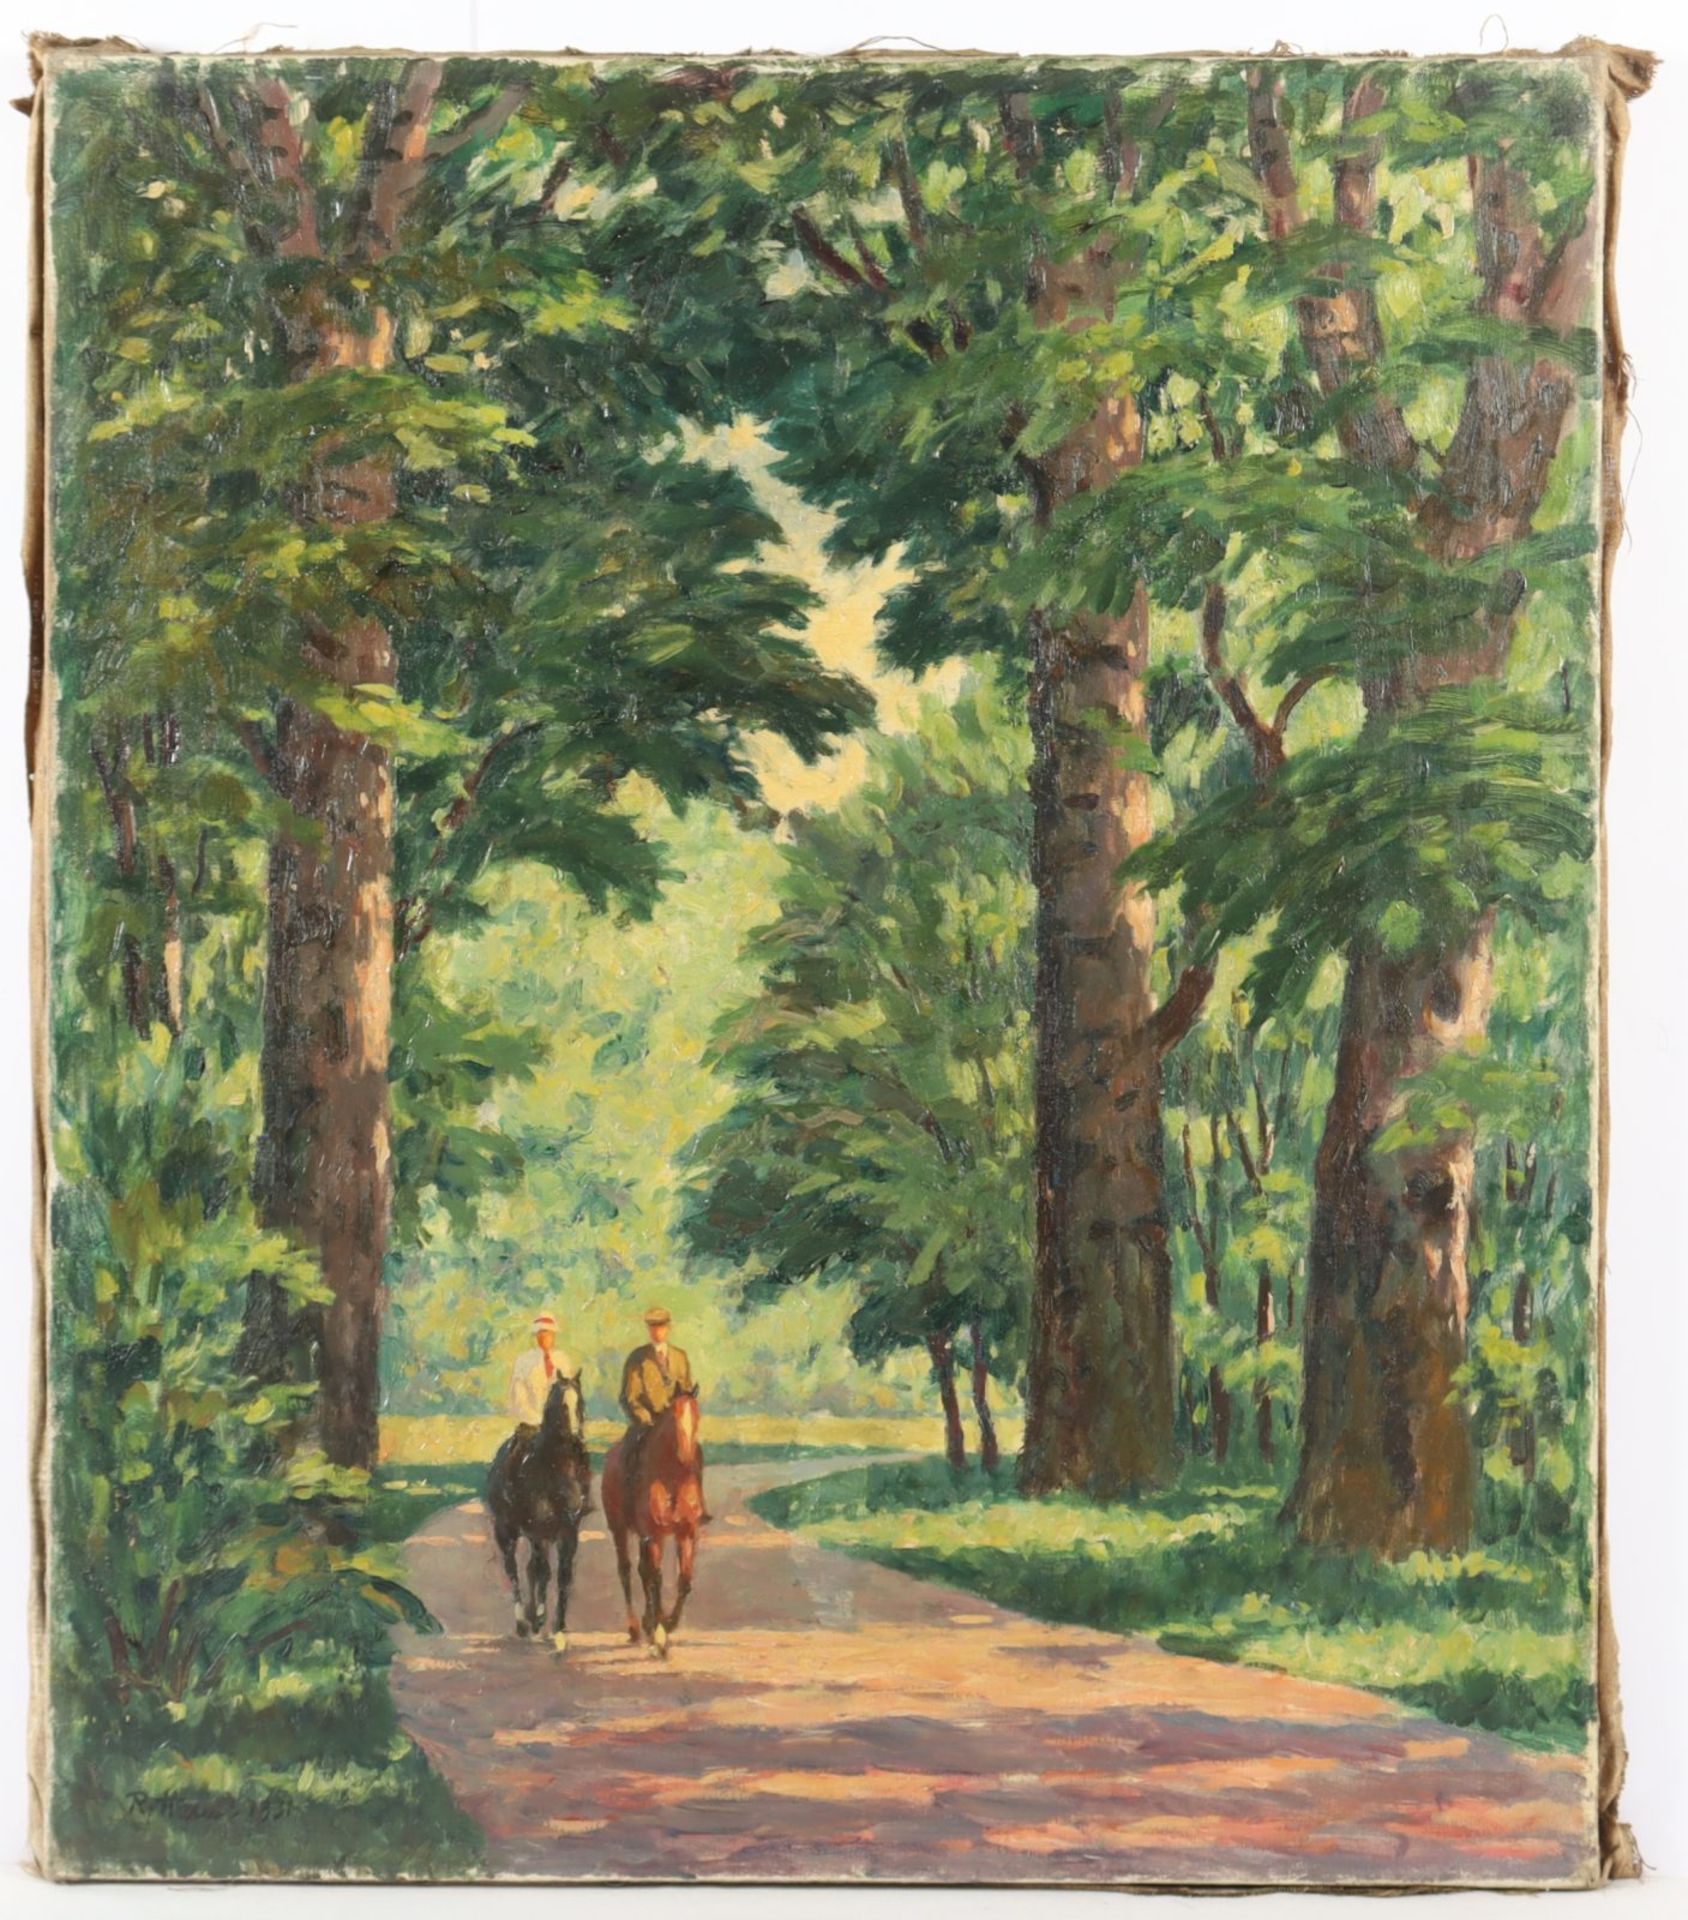 HAUSE, Rudolf (1877-1961), "Ausritt im Park" - Image 2 of 4